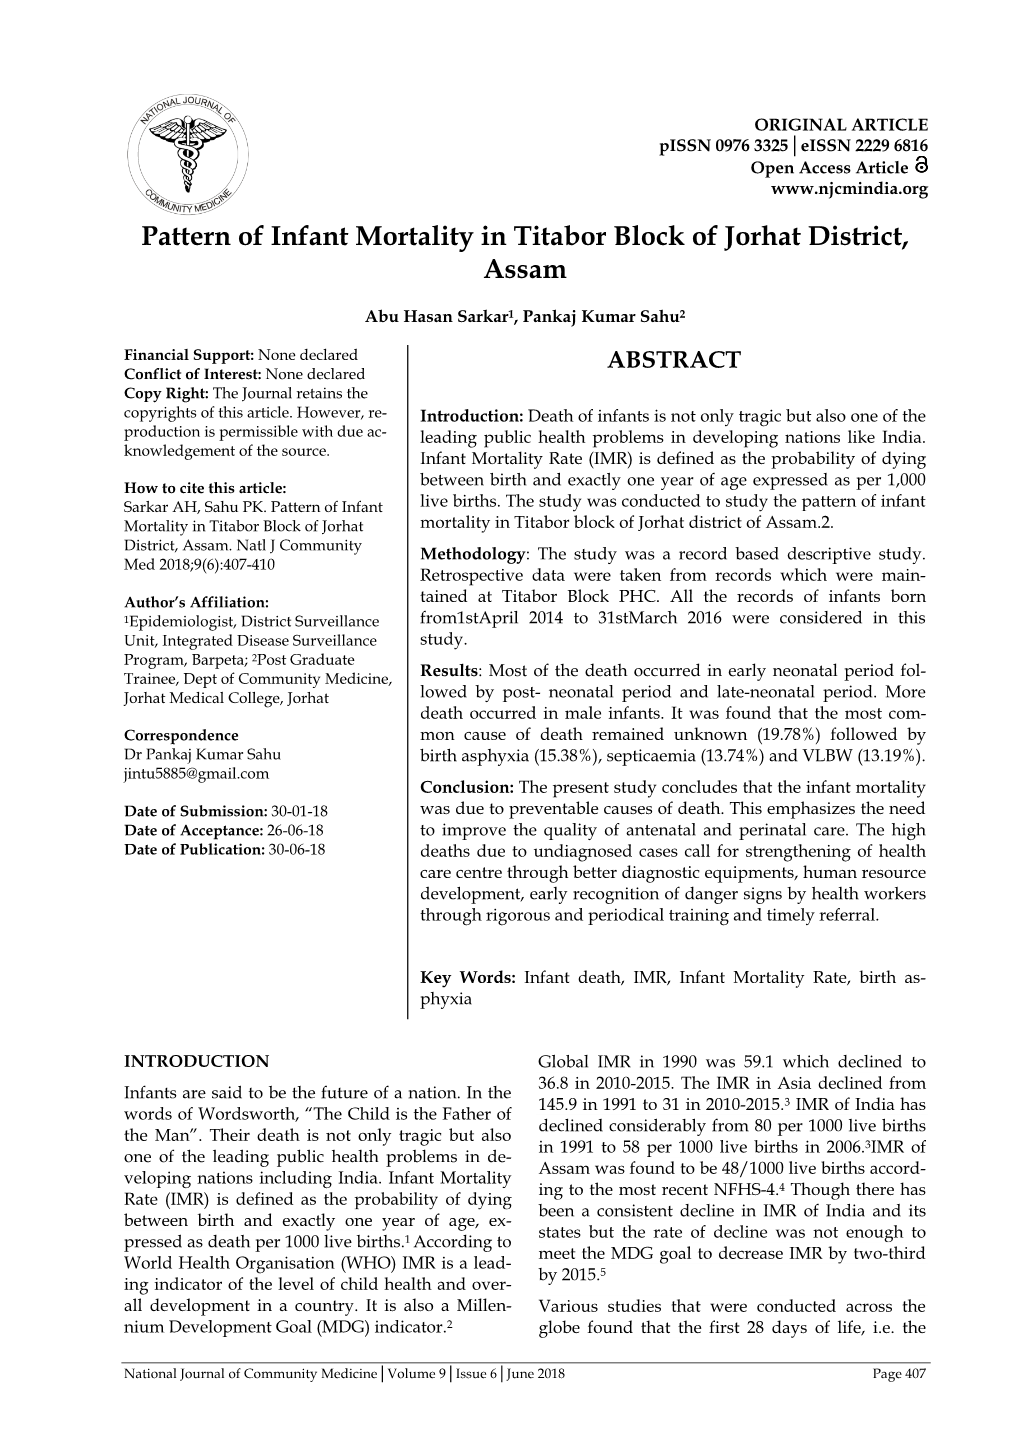 Pattern of Infant Mortality in Titabor Block of Jorhat District, Assam